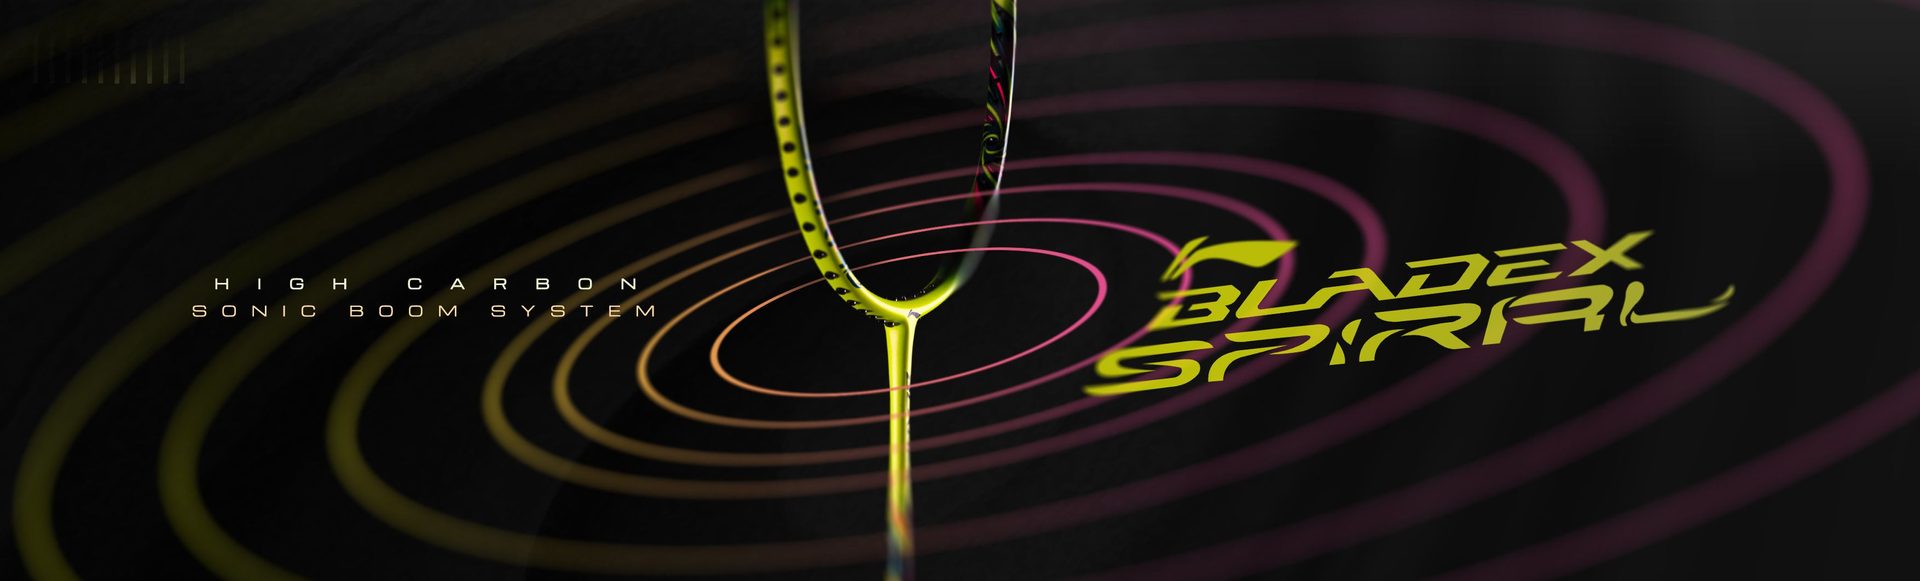 BladeX Spiral _ Badminton Racket